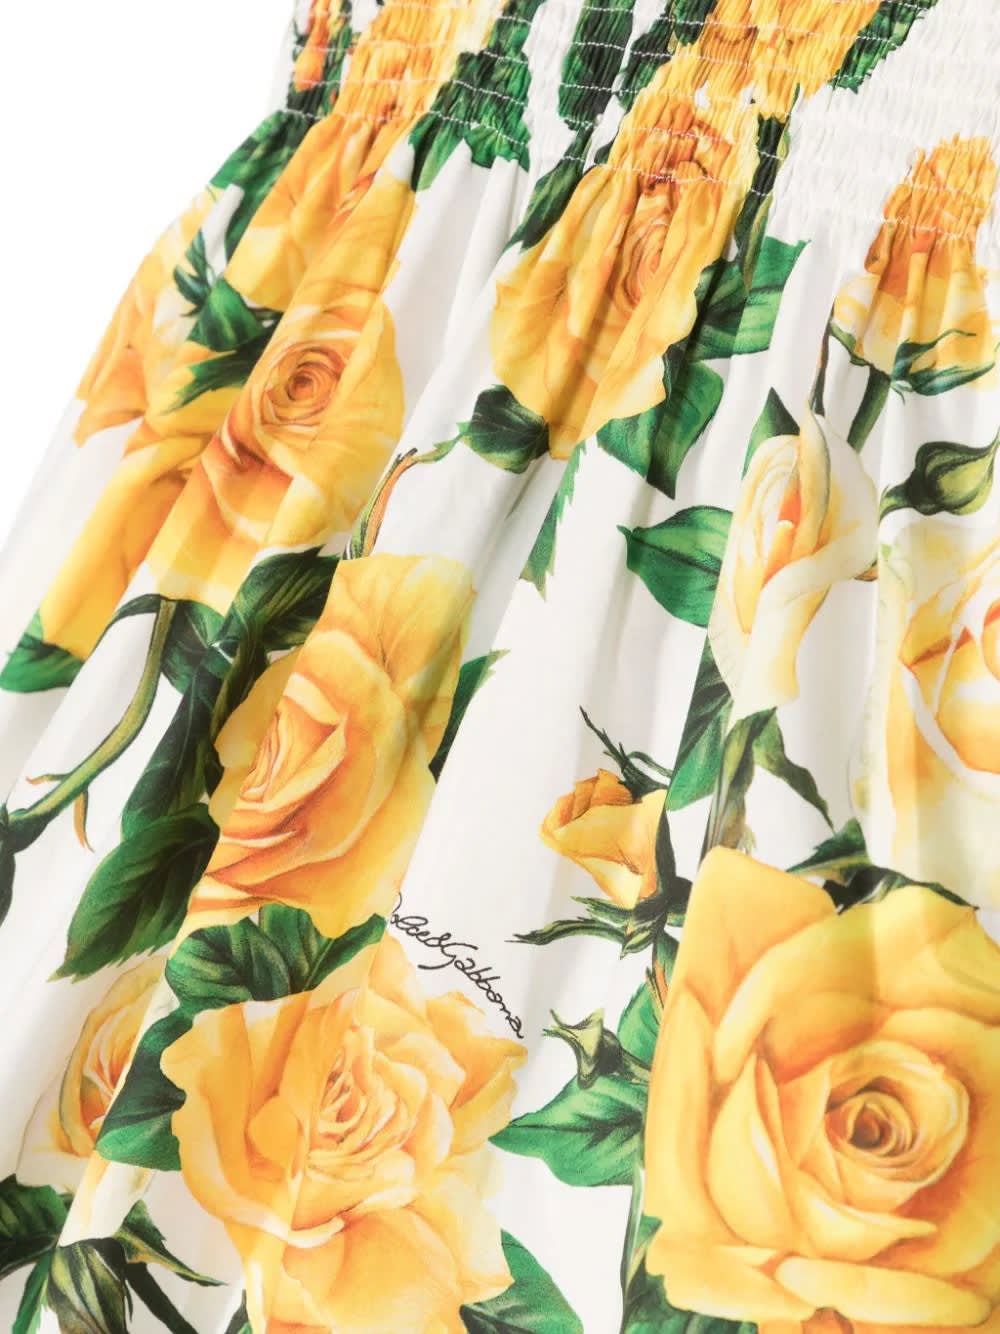 Shop Dolce & Gabbana White Sundress With Yellow Rose Print